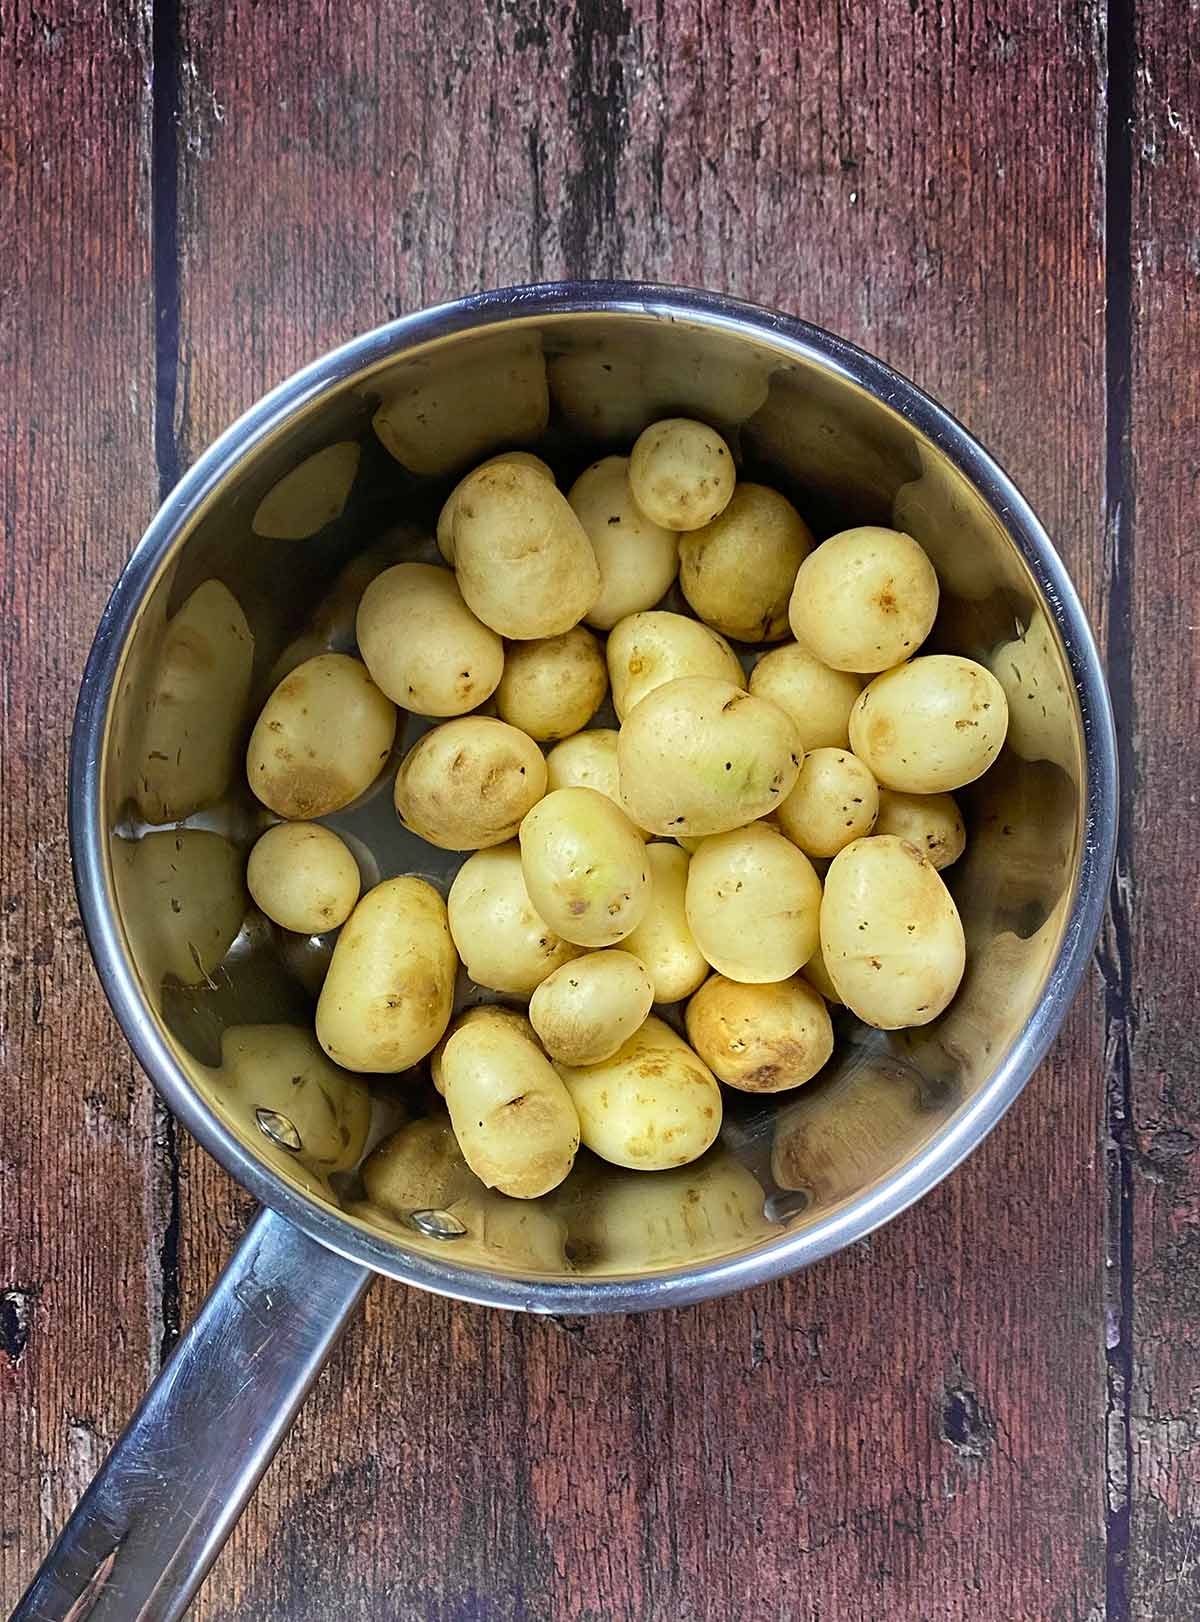 A saucepan containing new potatoes.